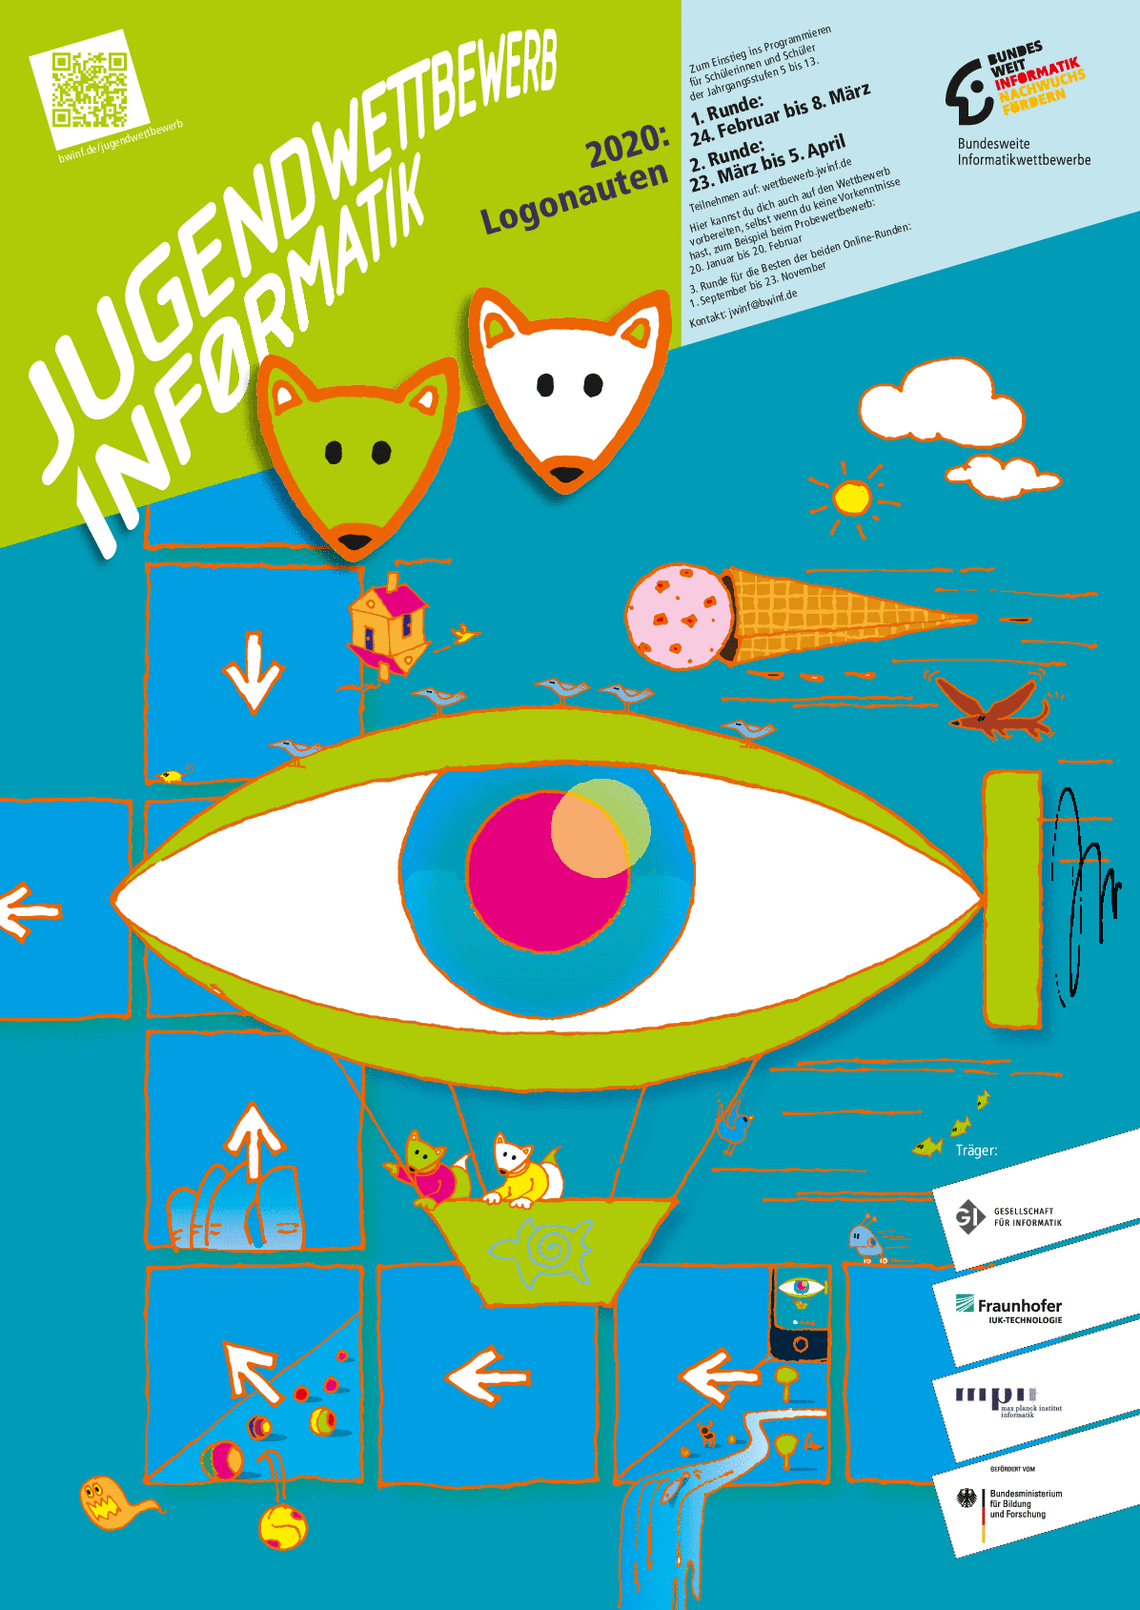 Platkat des Jugendwettbwerb Informatik 2020: Logonauten. 